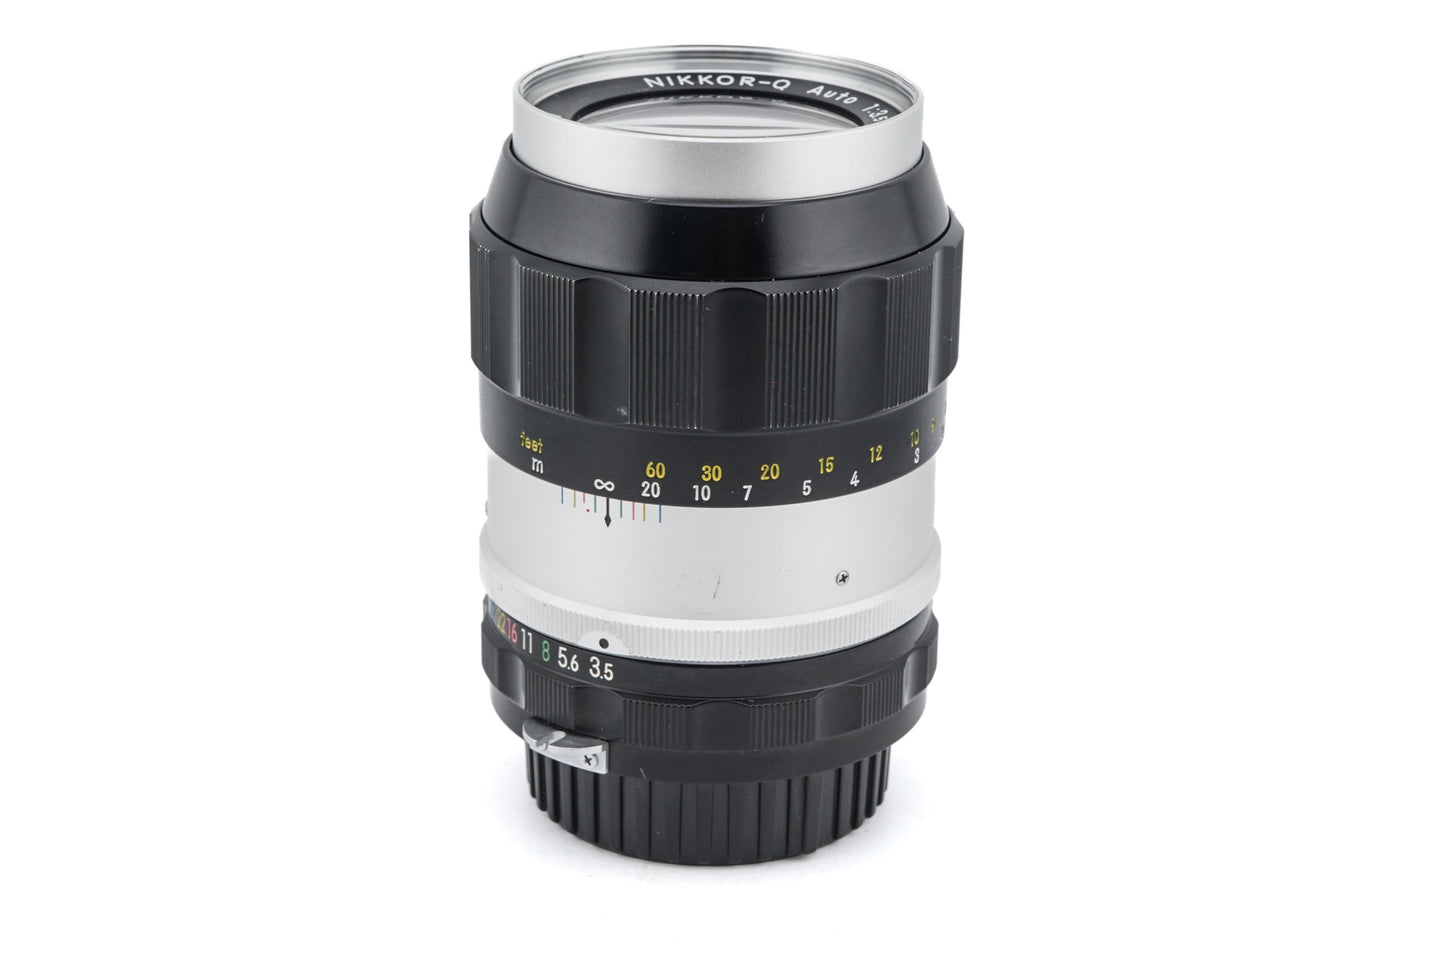 Nikon 135mm f3.5 Nikkor-Q Auto Pre-AI - Lens